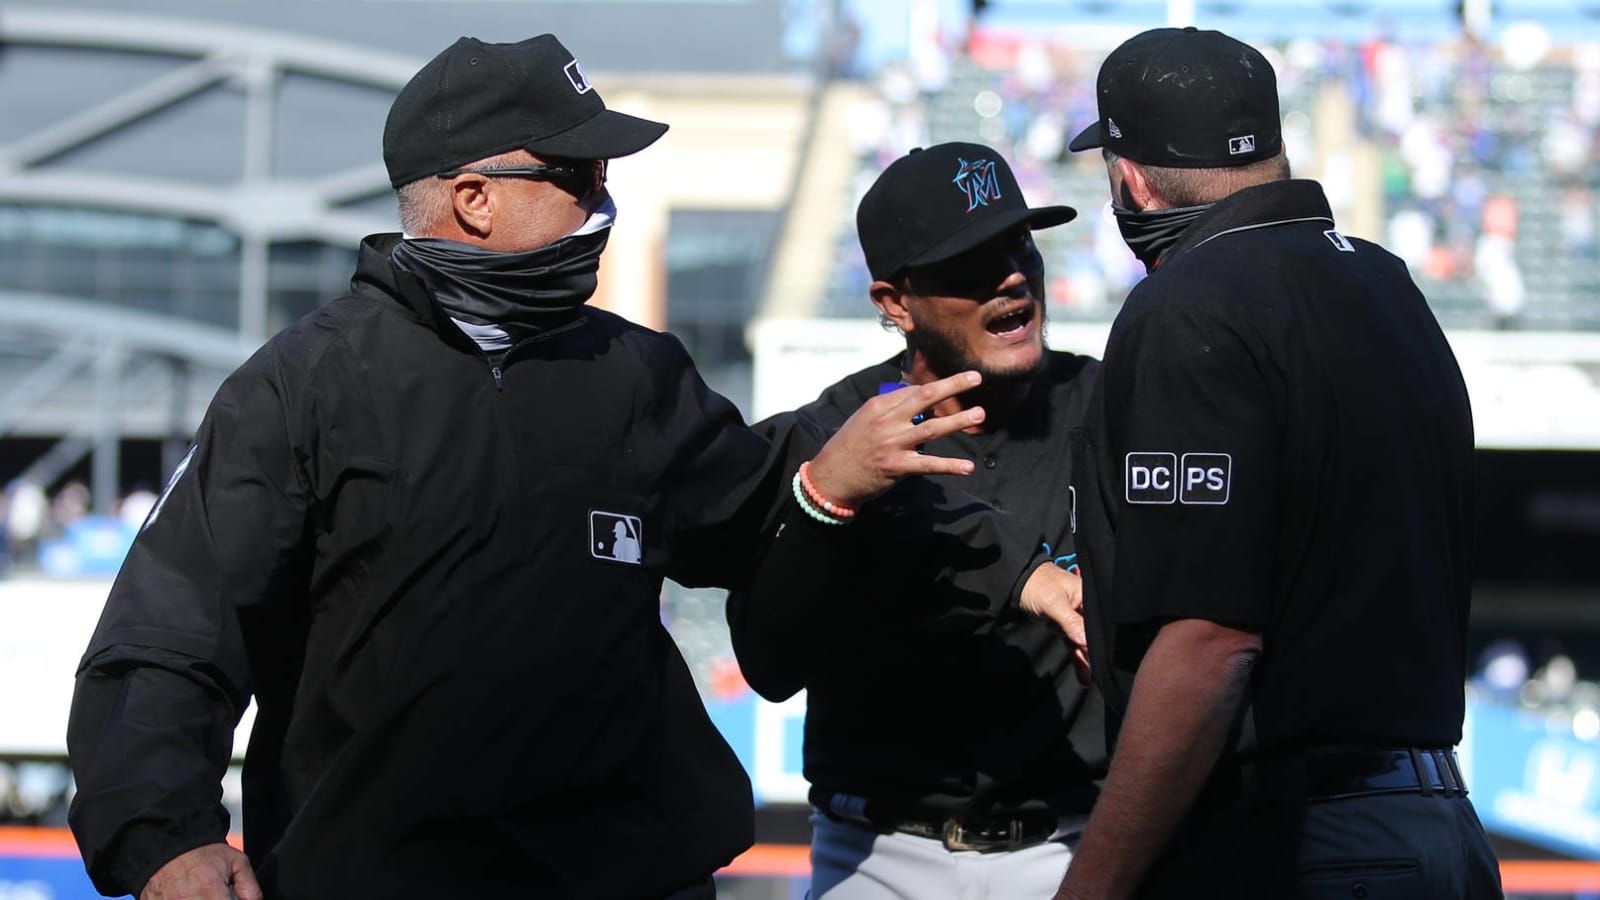 Umpire admits he blew call in Mets' win vs. Marlins